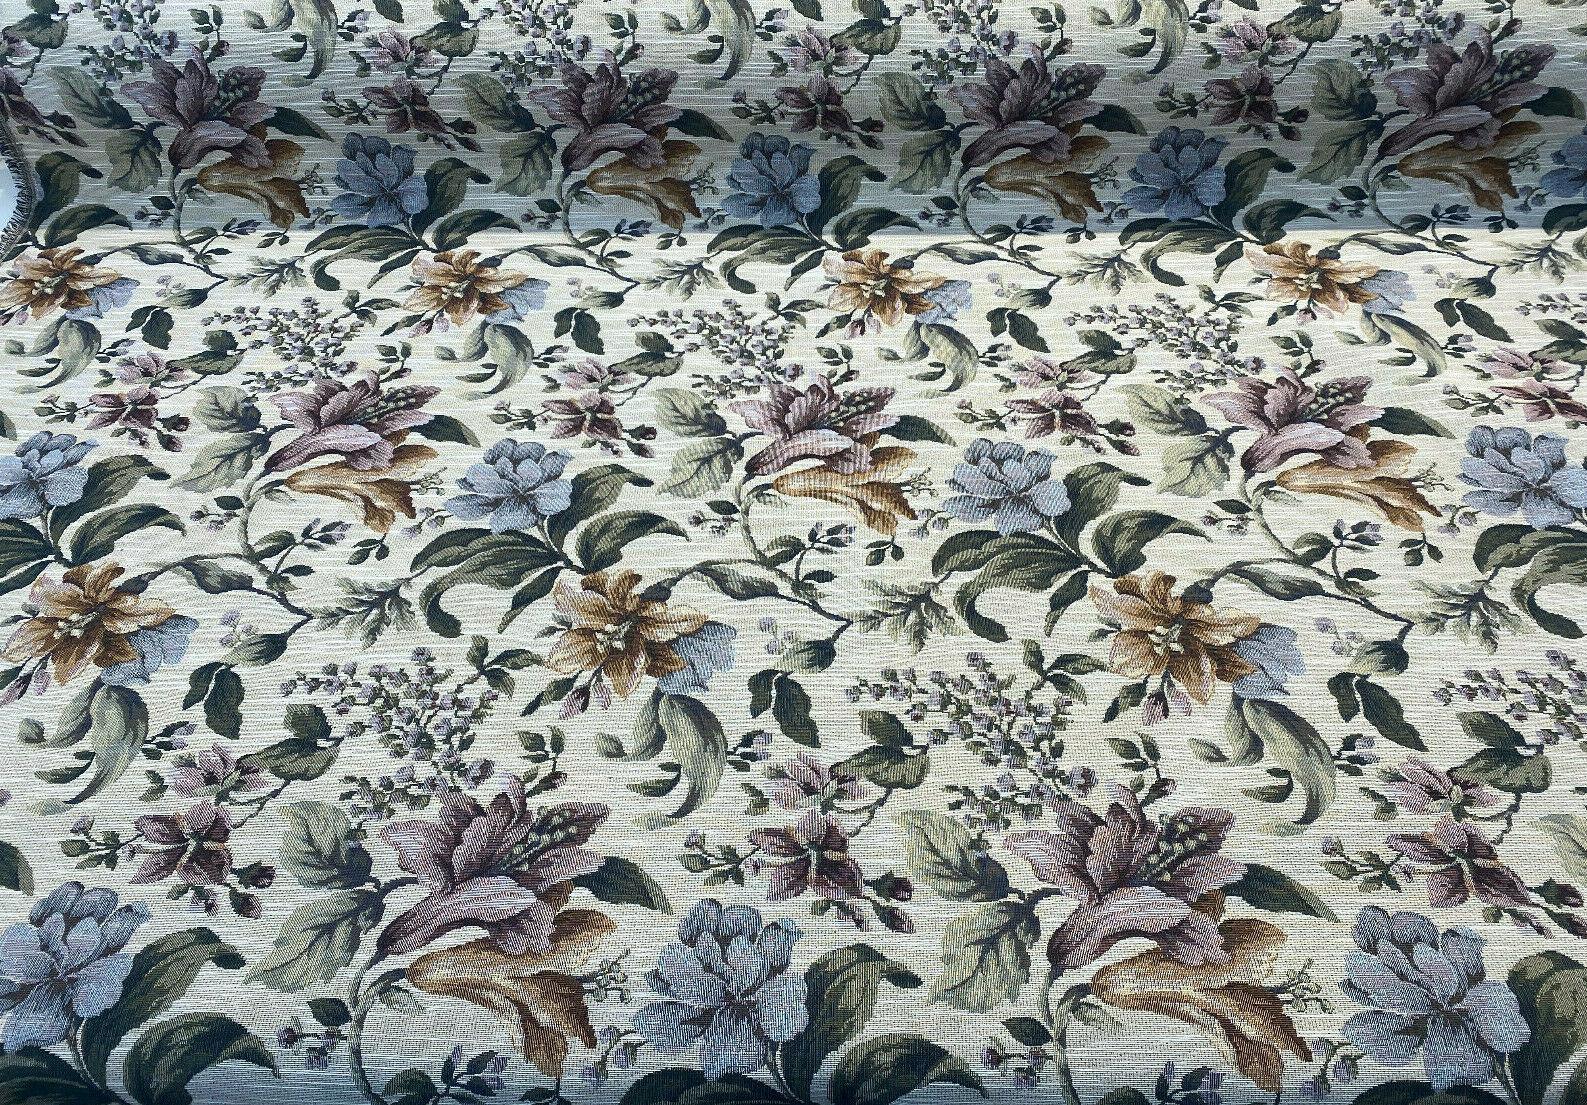 Belgique Tapestry Collection - Floral pattern on black background